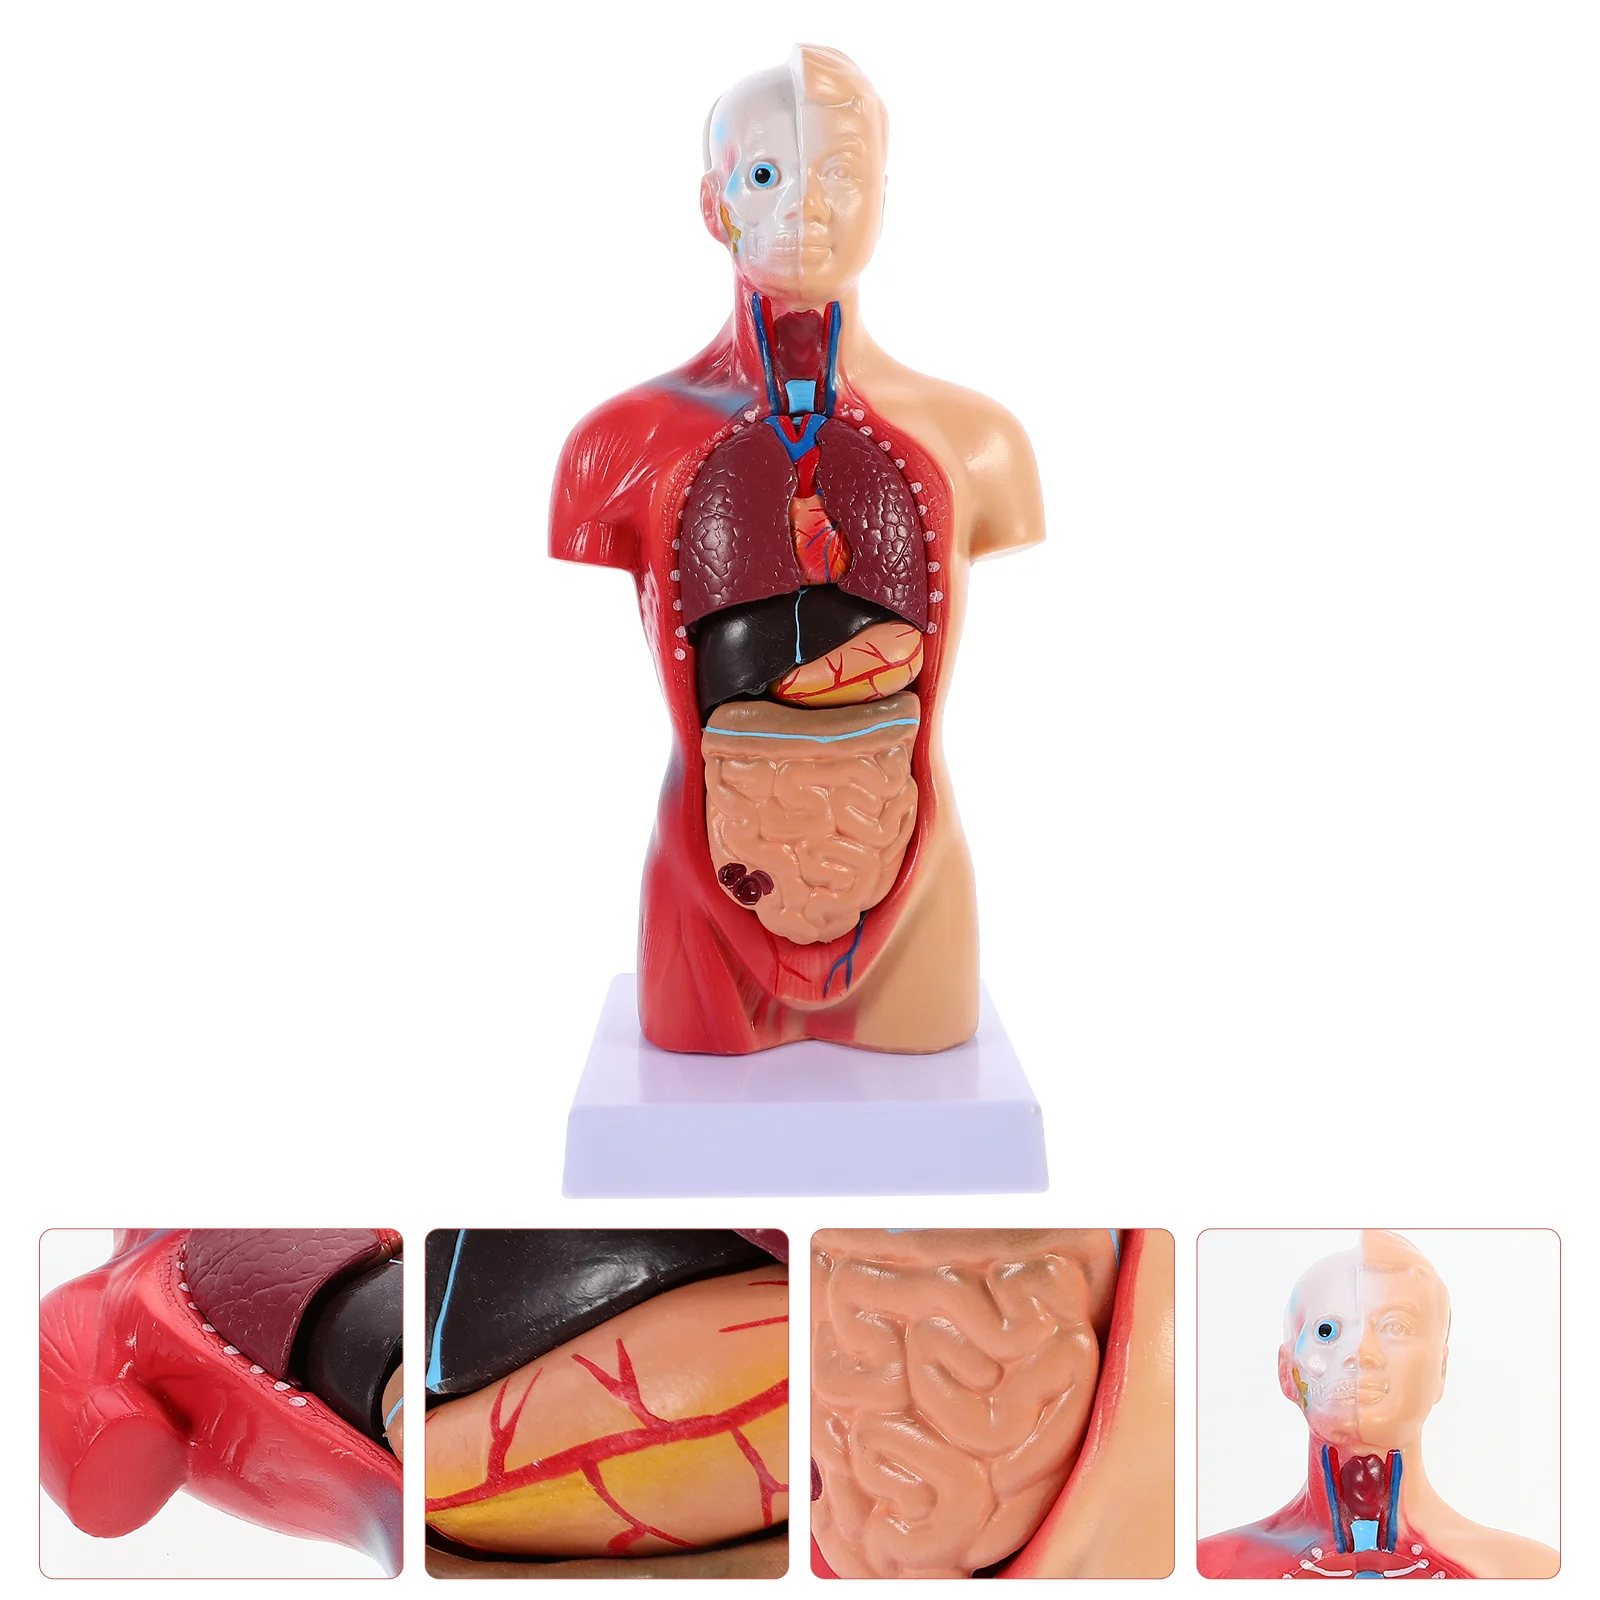 

Mannequin Anatomy Model Anatomical Teaching Human Torso Children's Toys Educational Body Organs Medical School Tool Greys